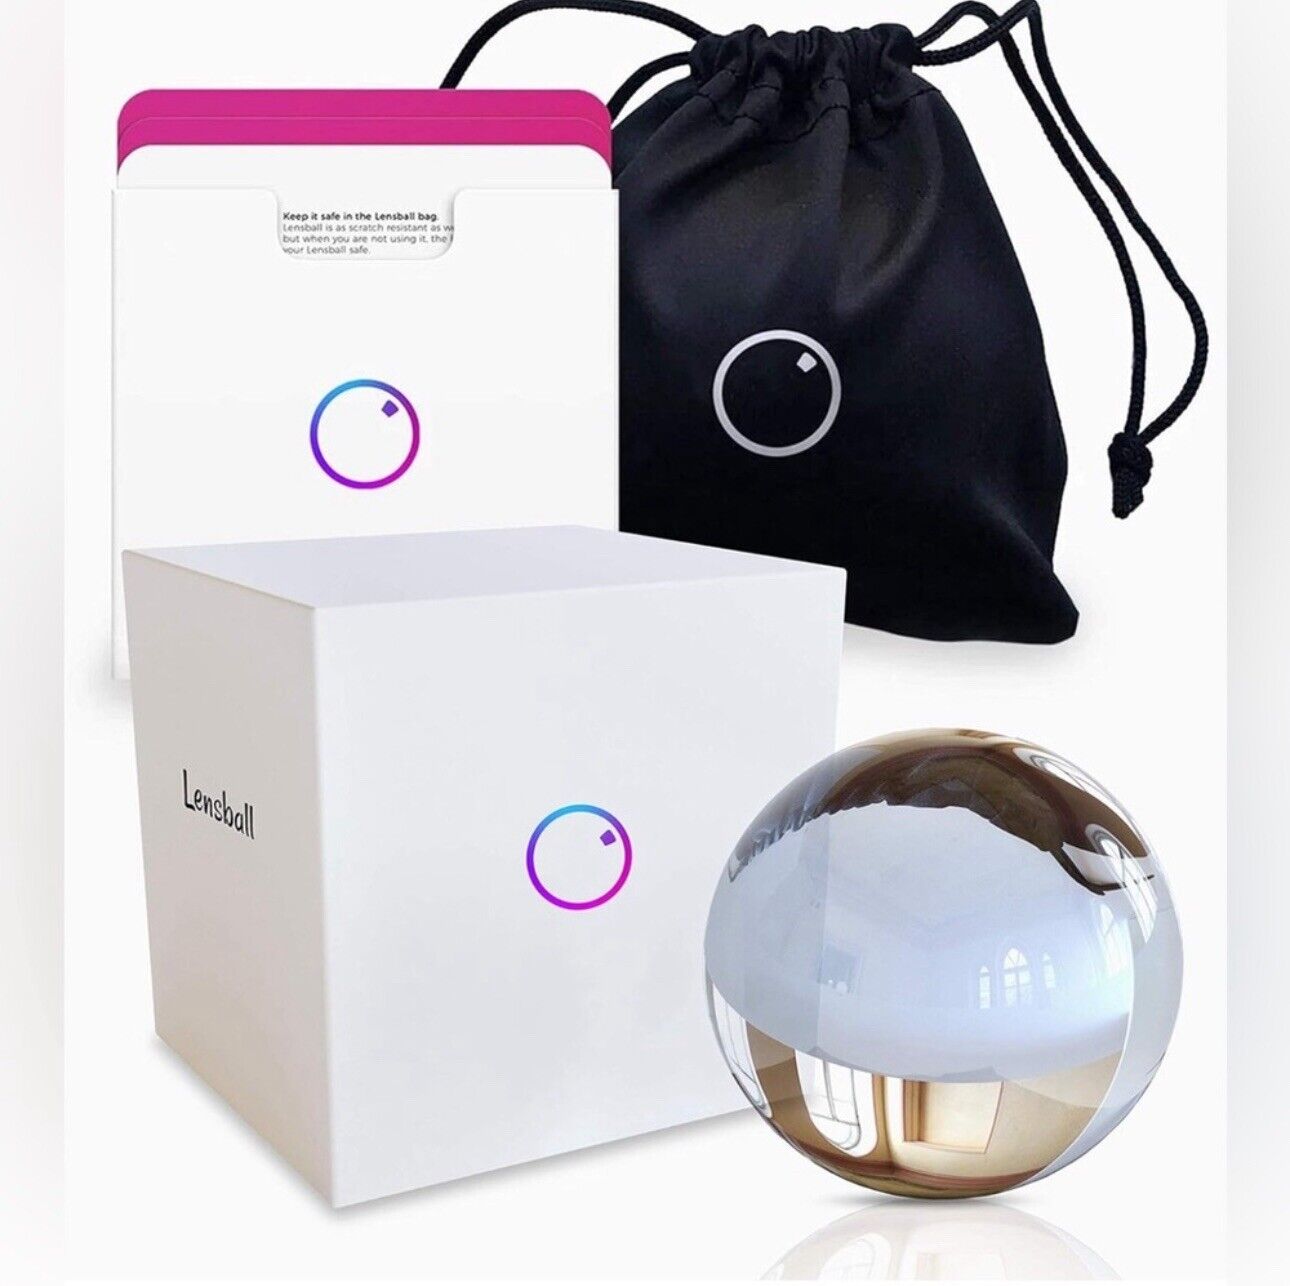 Lensball Pocket60mm,K9 Clear Crystal Ball photo Sphere + Microfiber Bag